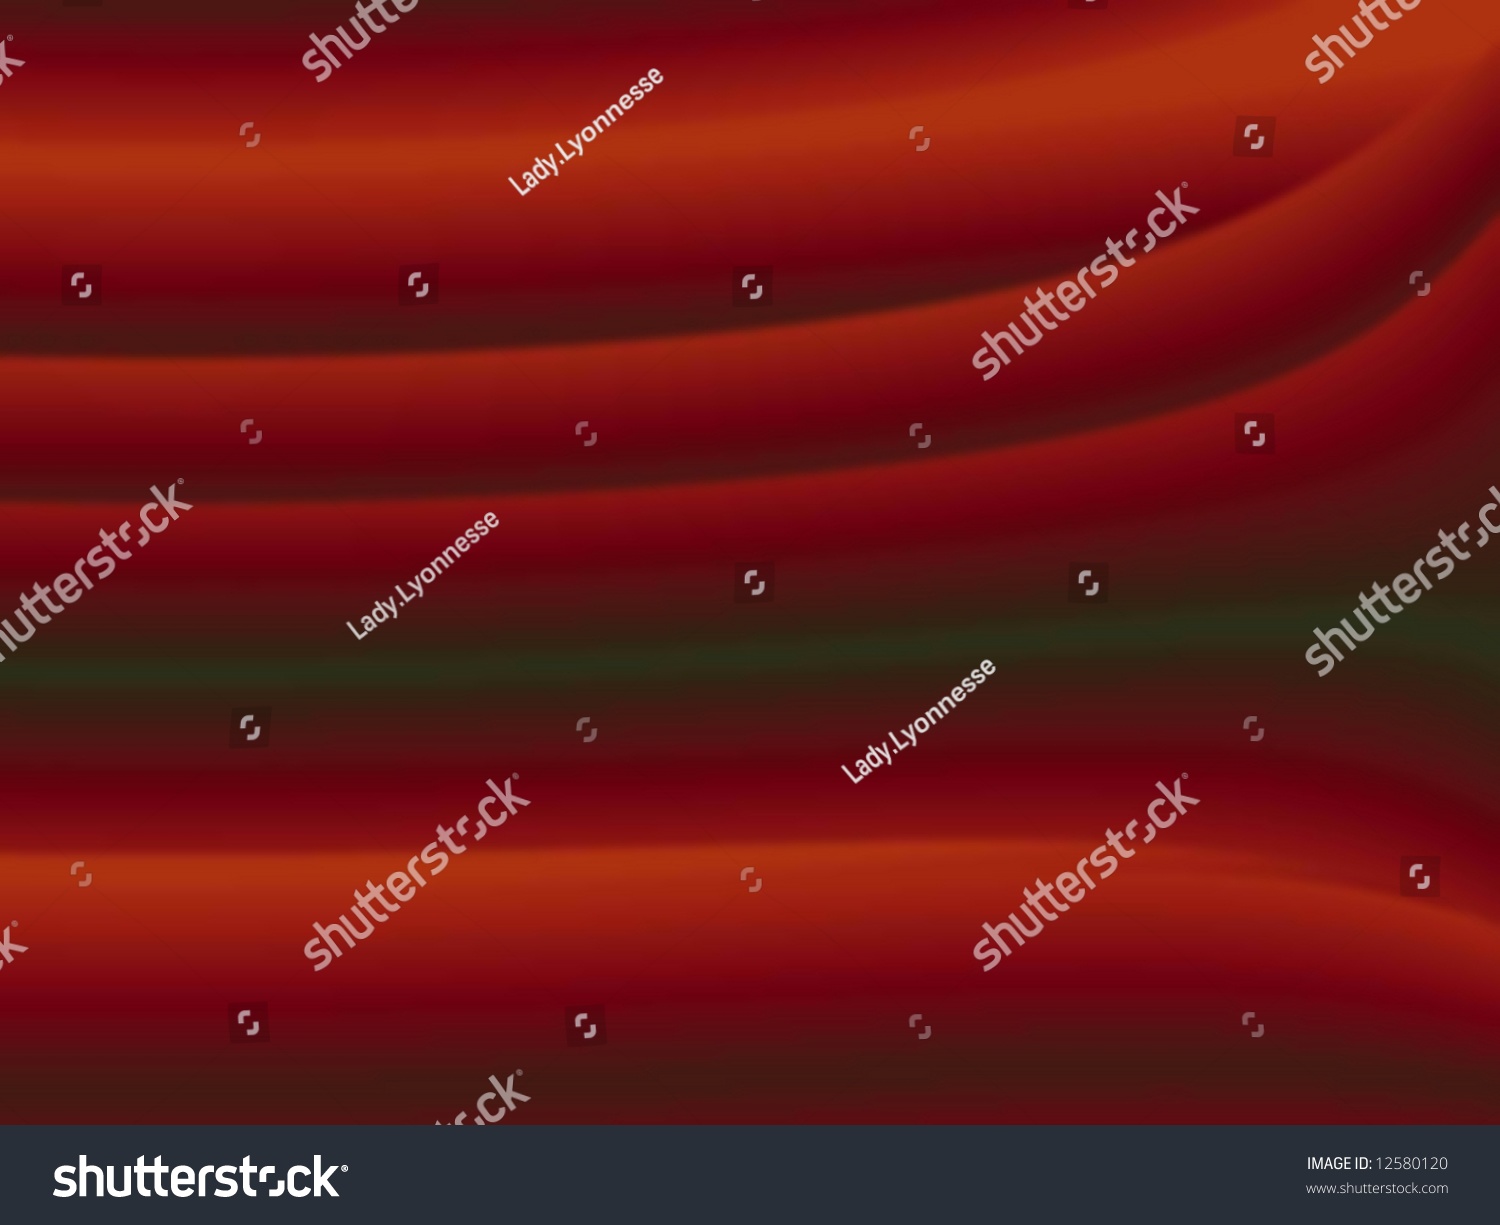 Textured Burgundy Background Stock Photo 12580120 : Shutterstock